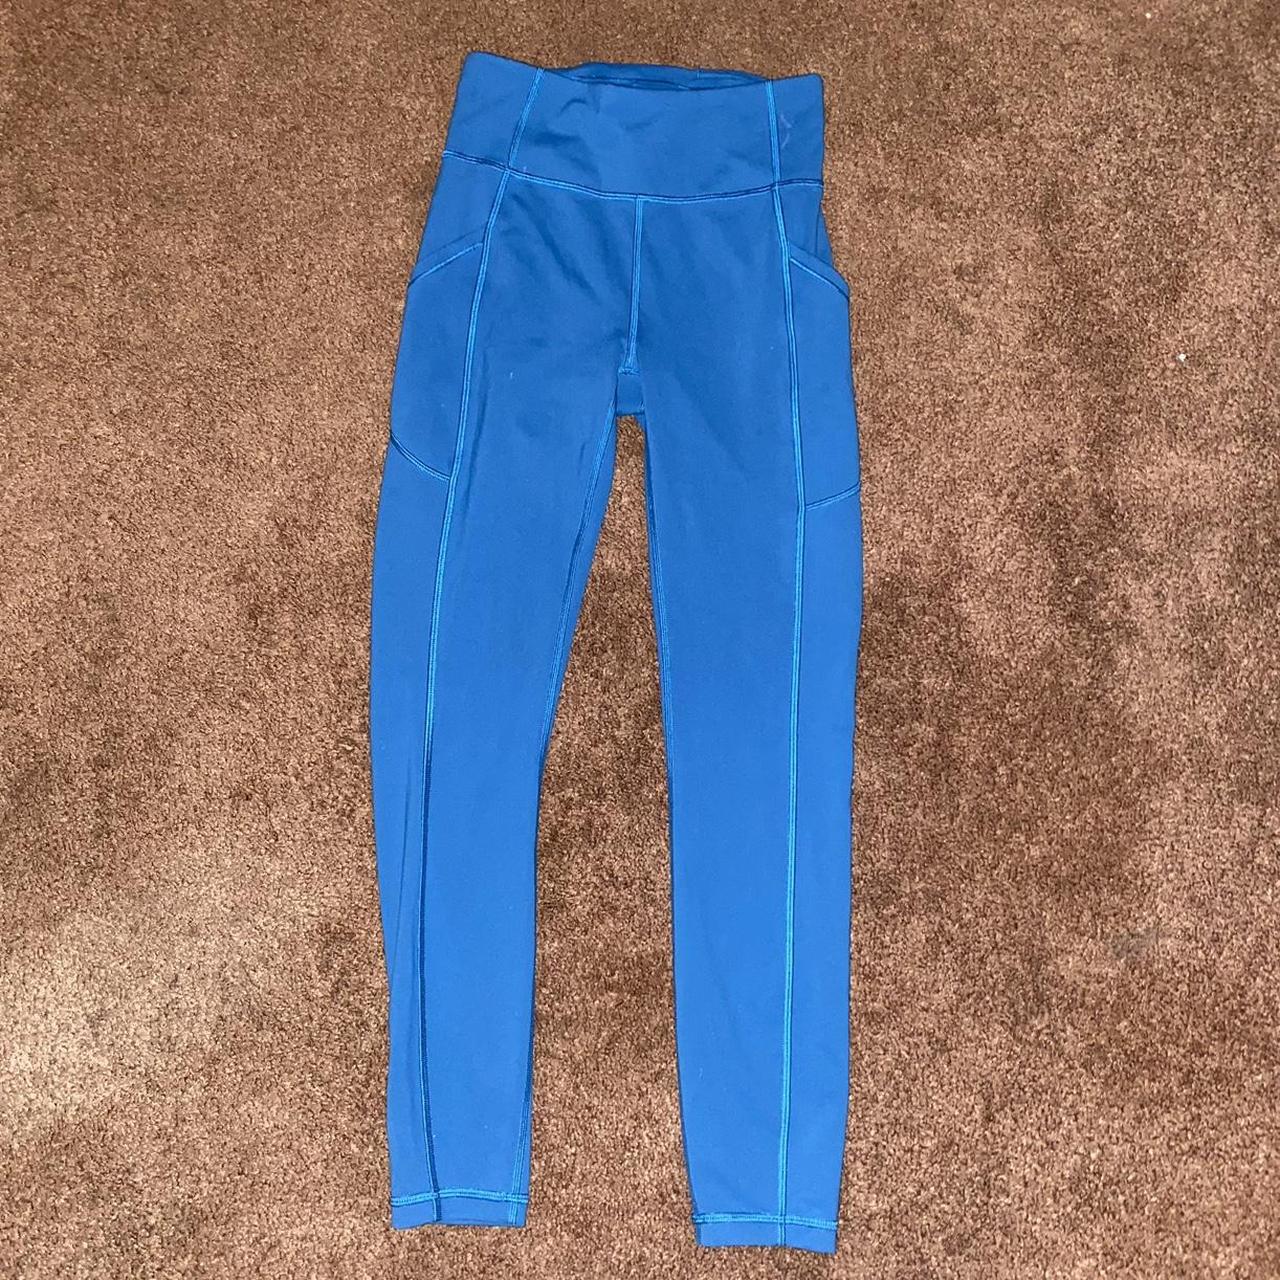 Lululemon leggings Blue workout pants Size 4 ASAP - Depop